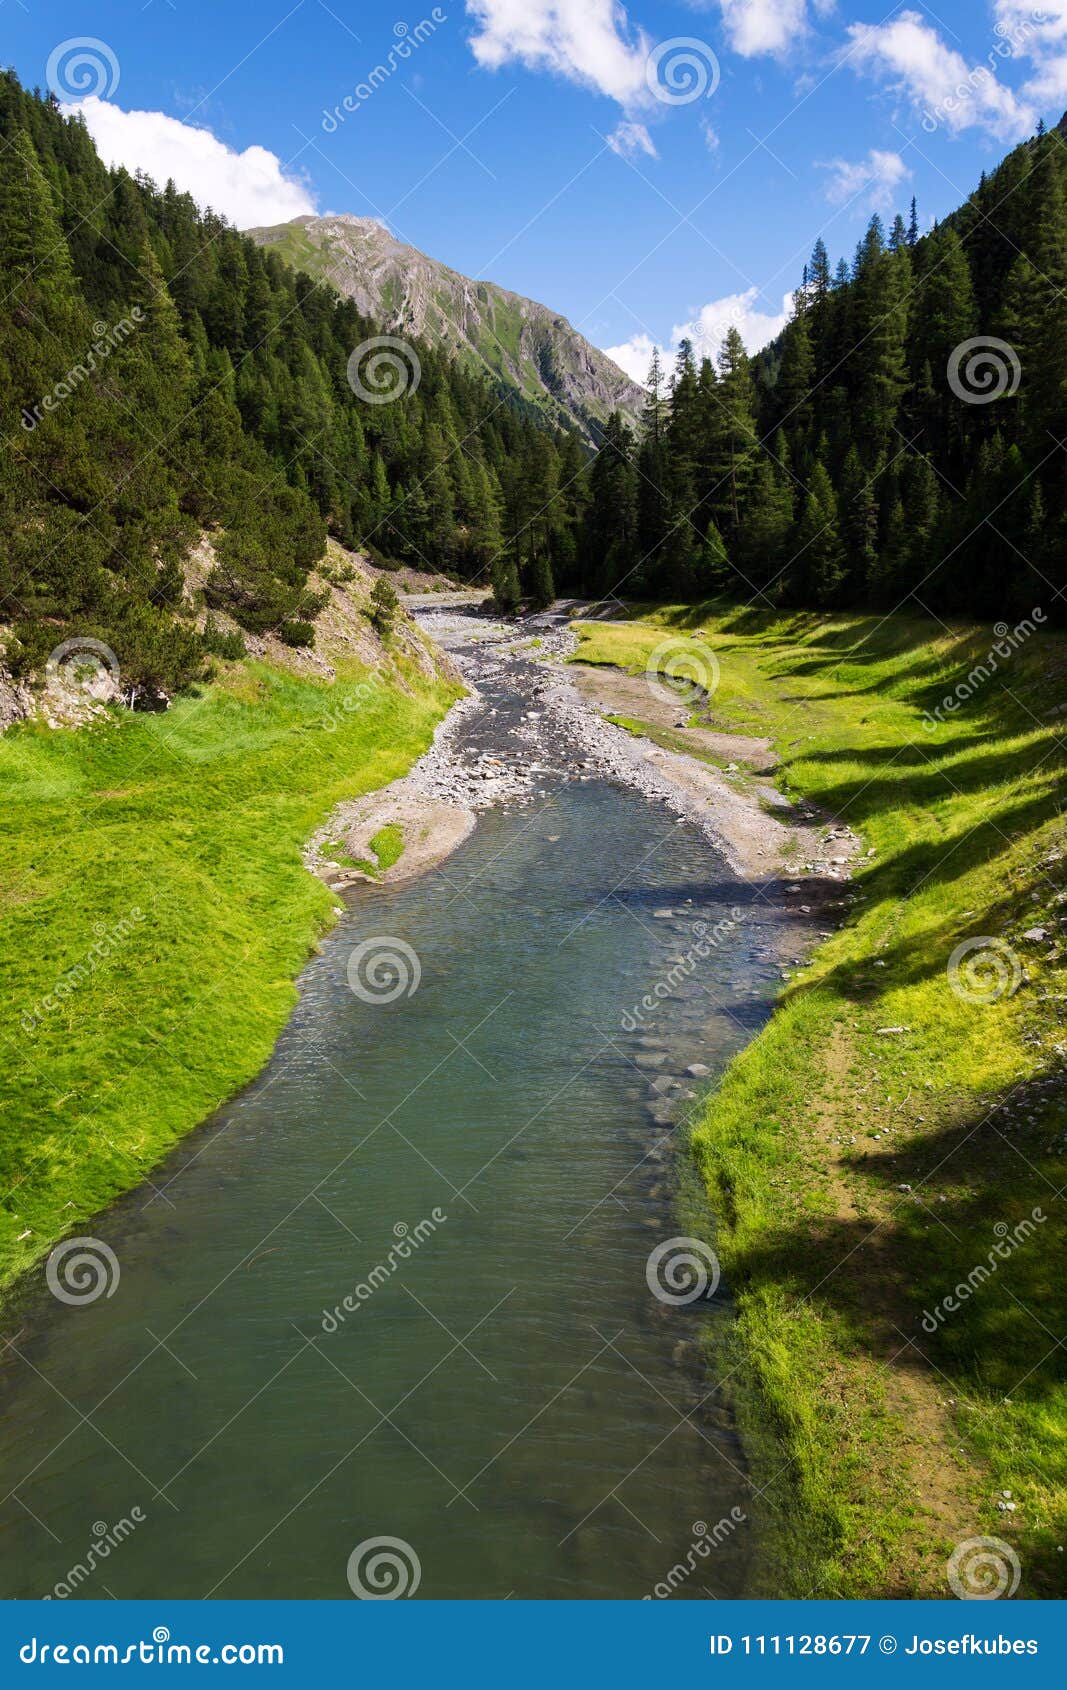 torrente vallaccia flows into lake lago di livigno reservoir, italy